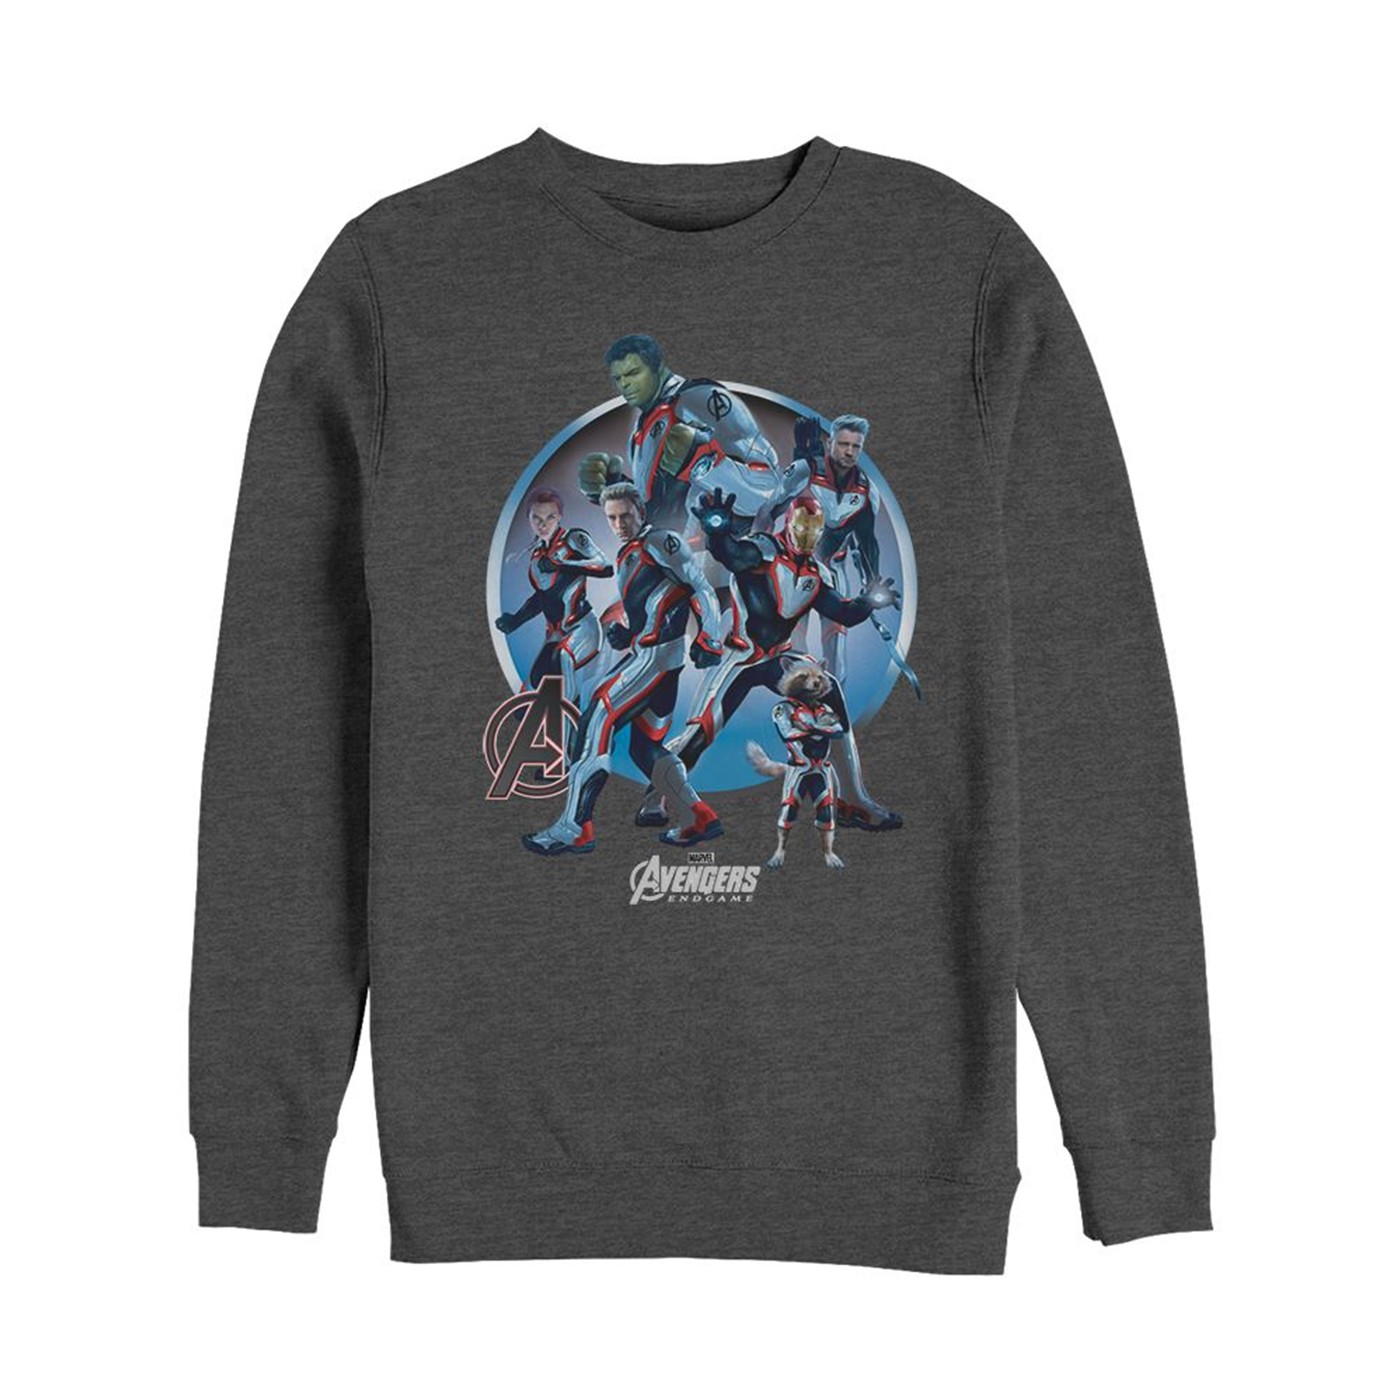 Avengers Endgame Unite Crewneck Sweater